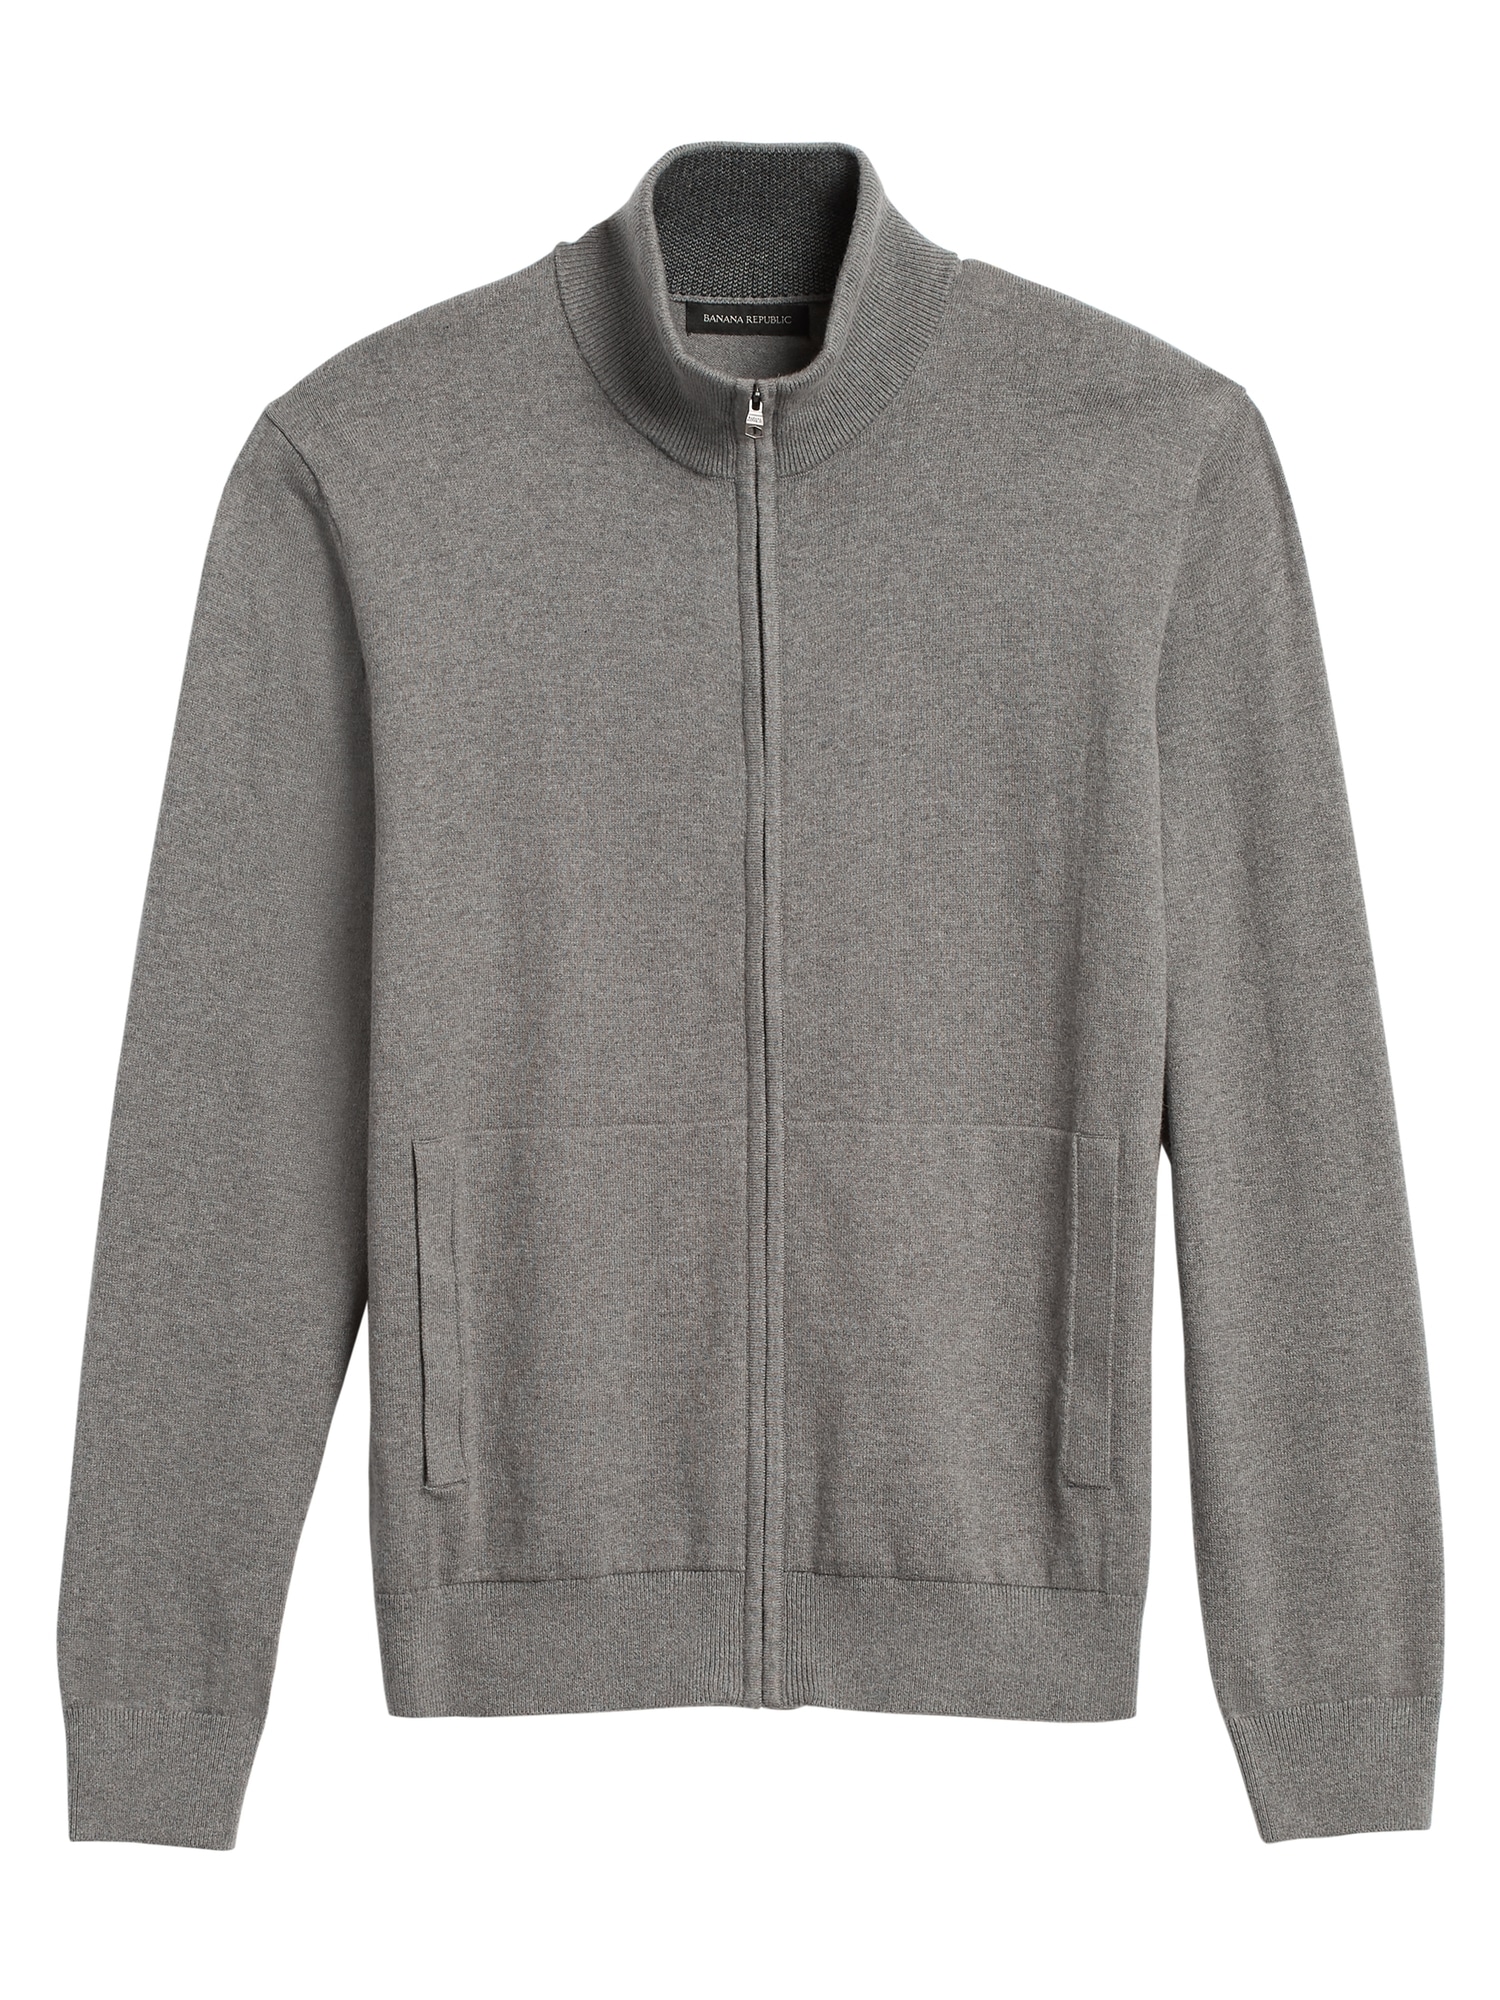 Cotton Cashmere Sweater Jacket